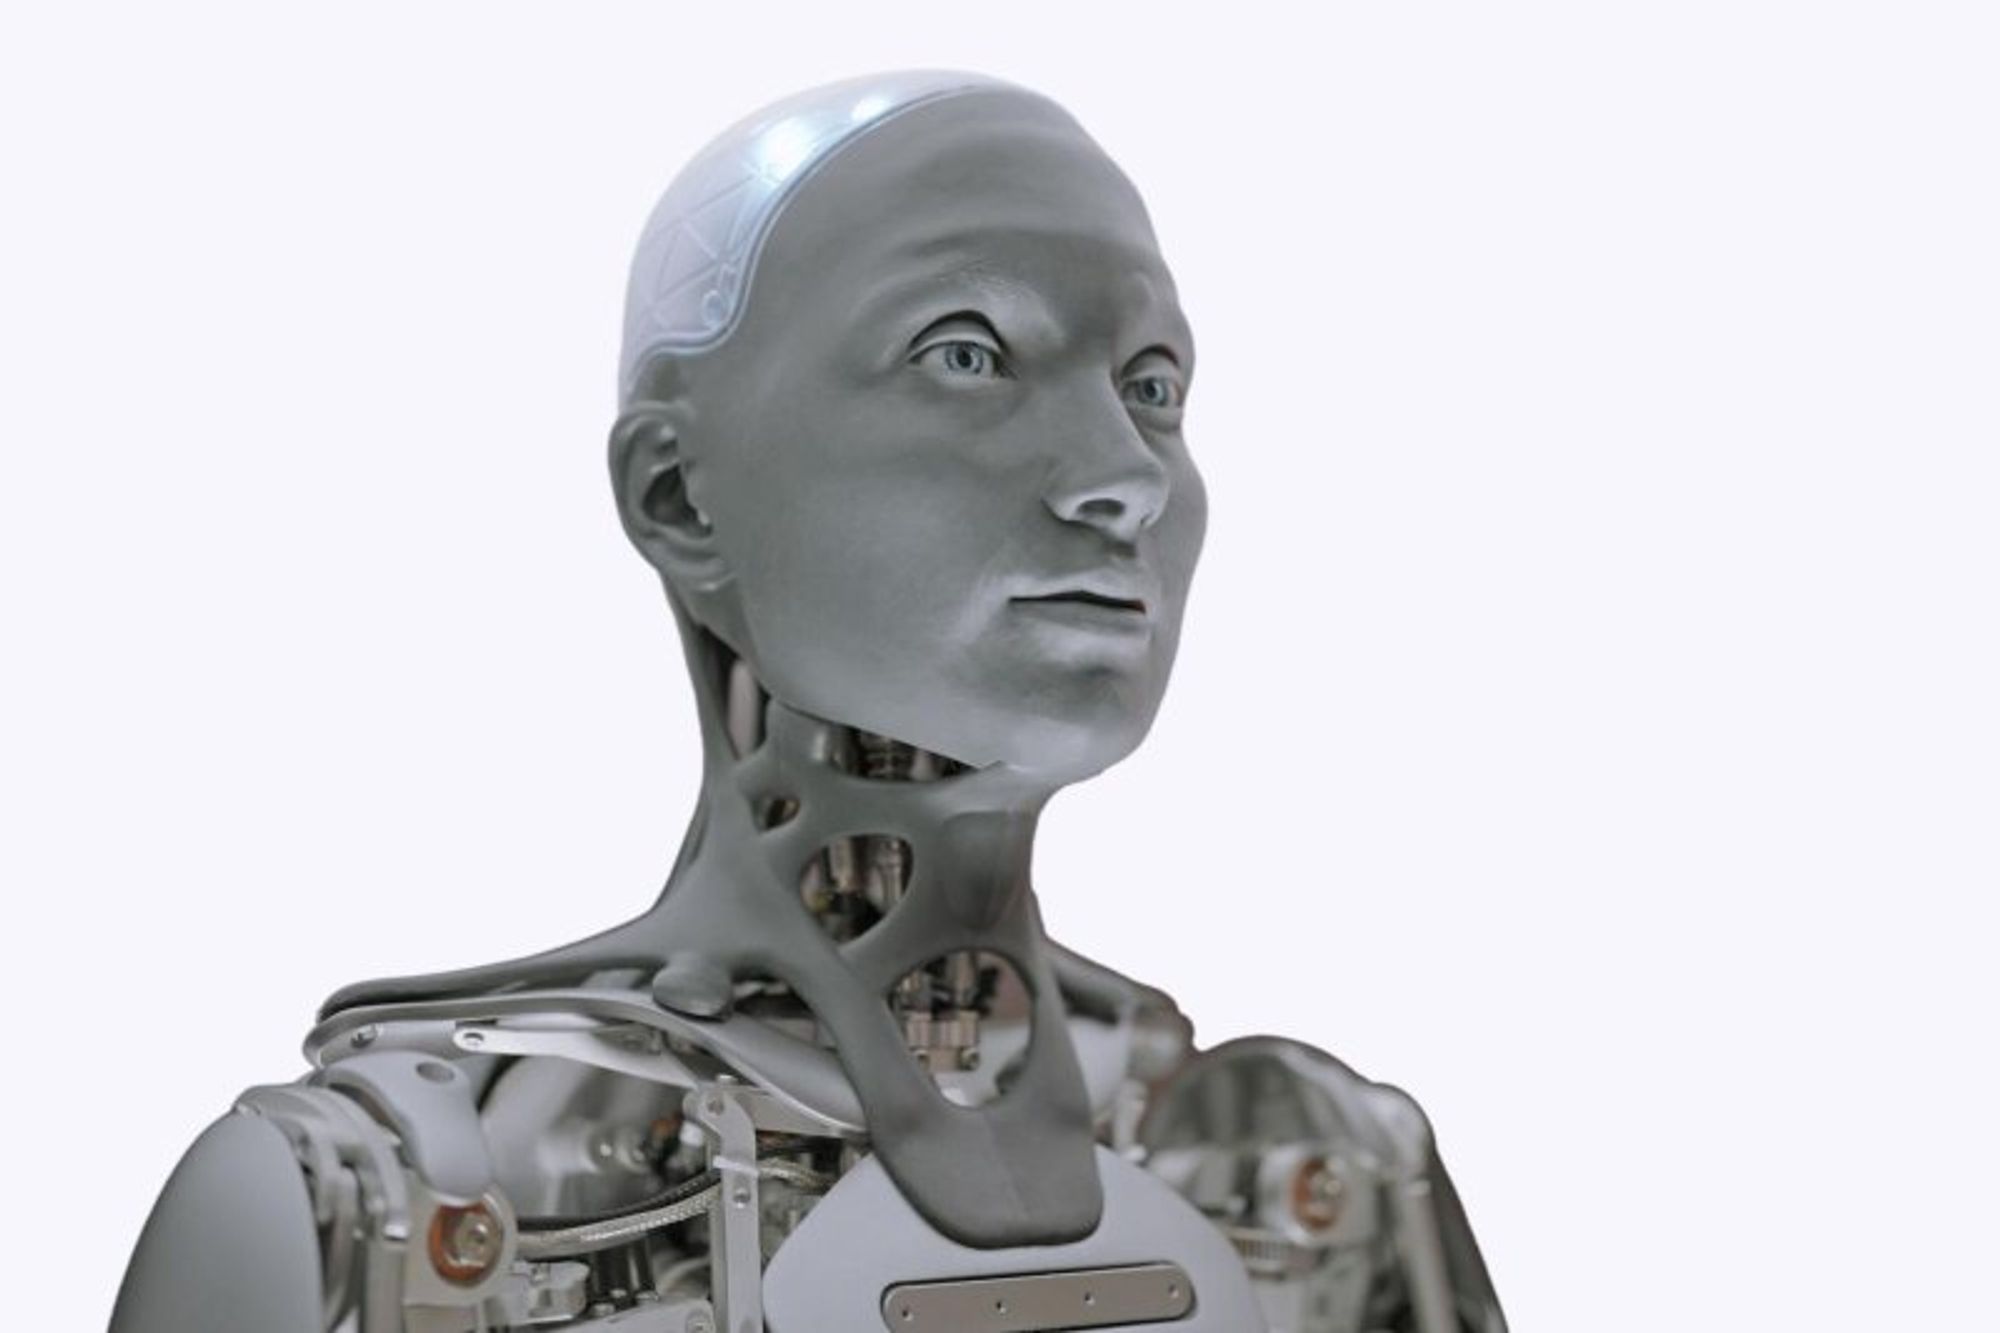 Aura, a humanoid robot, will assist guests at Las Vegas's Sphere arena - UPI.com